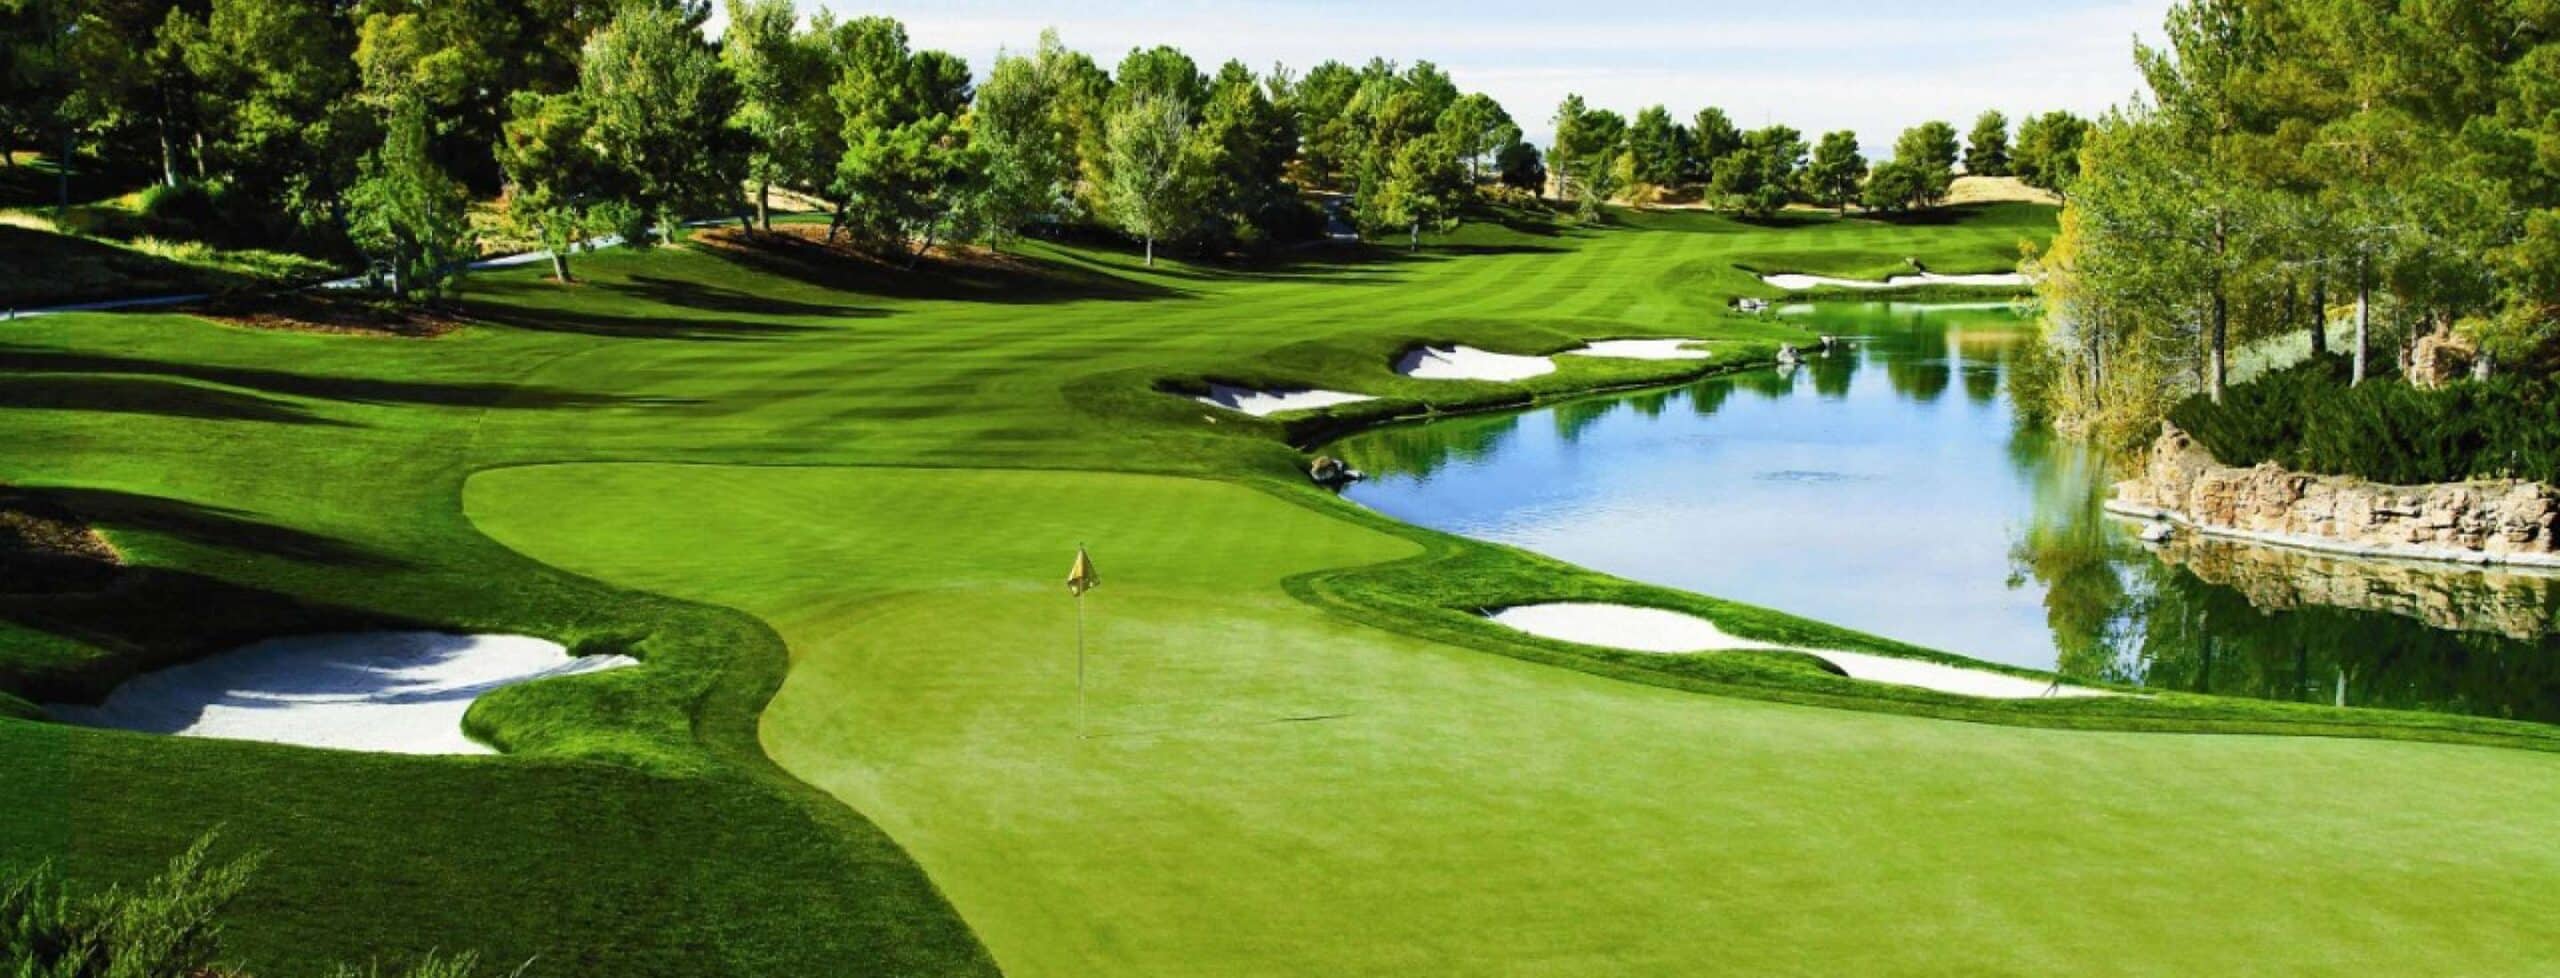 mgm-grand-amenities-golf-shadow-creek-03-@2x.jpg.image.2880.1100.high